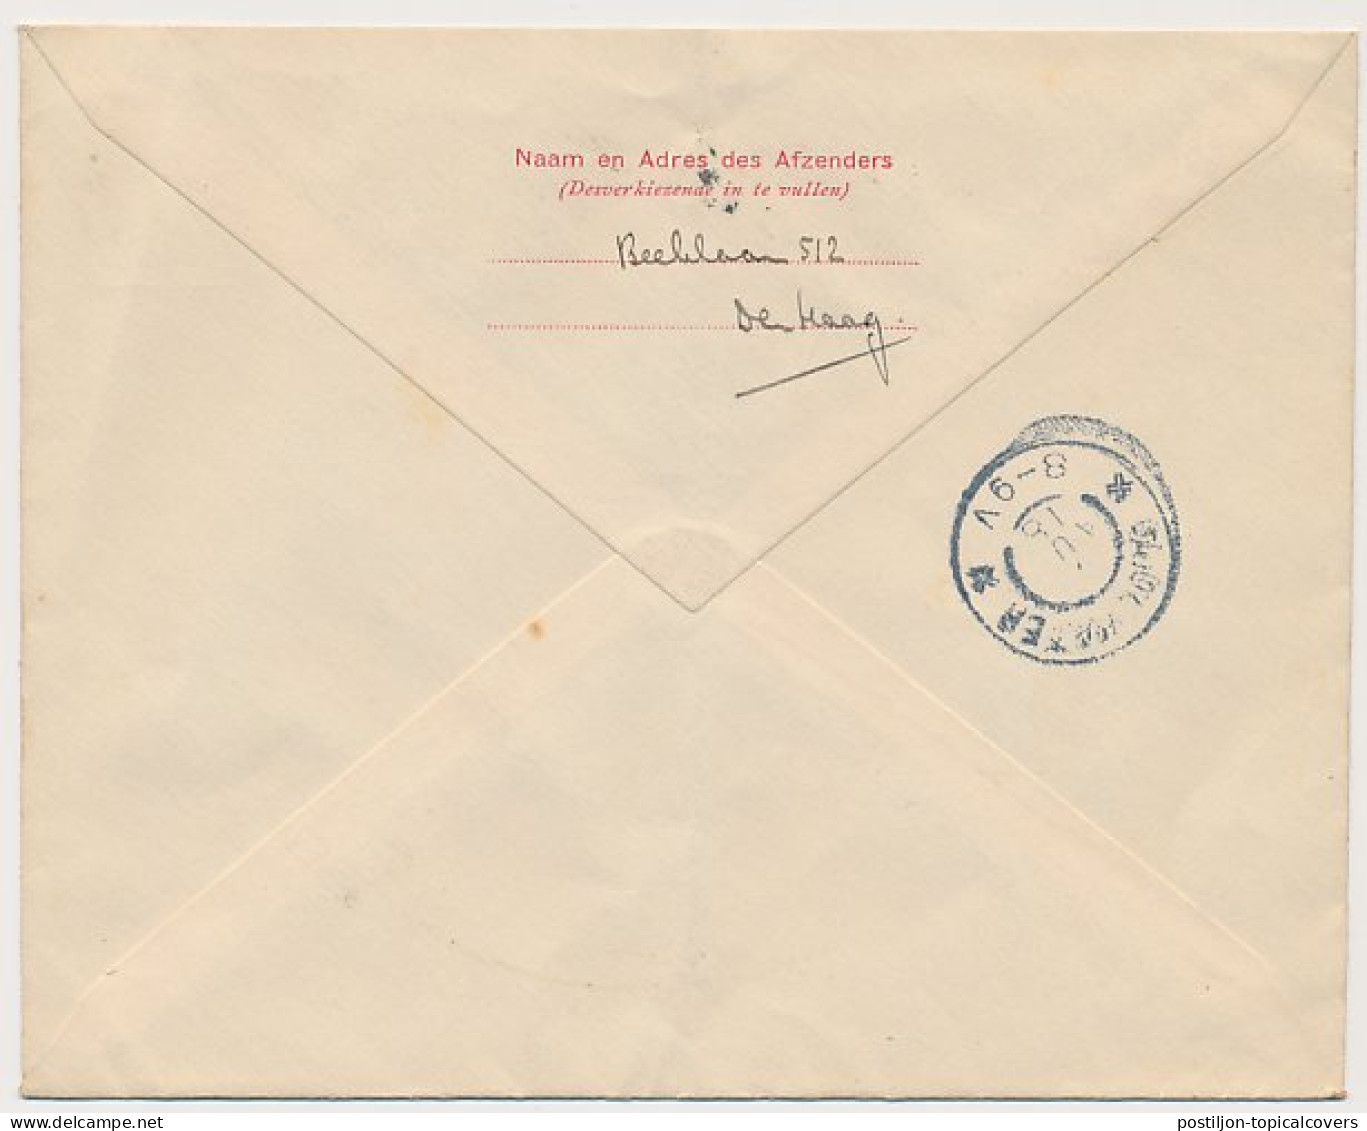 Envelop G. 20 B S Gravenhage - Oudewater 1918 - Material Postal